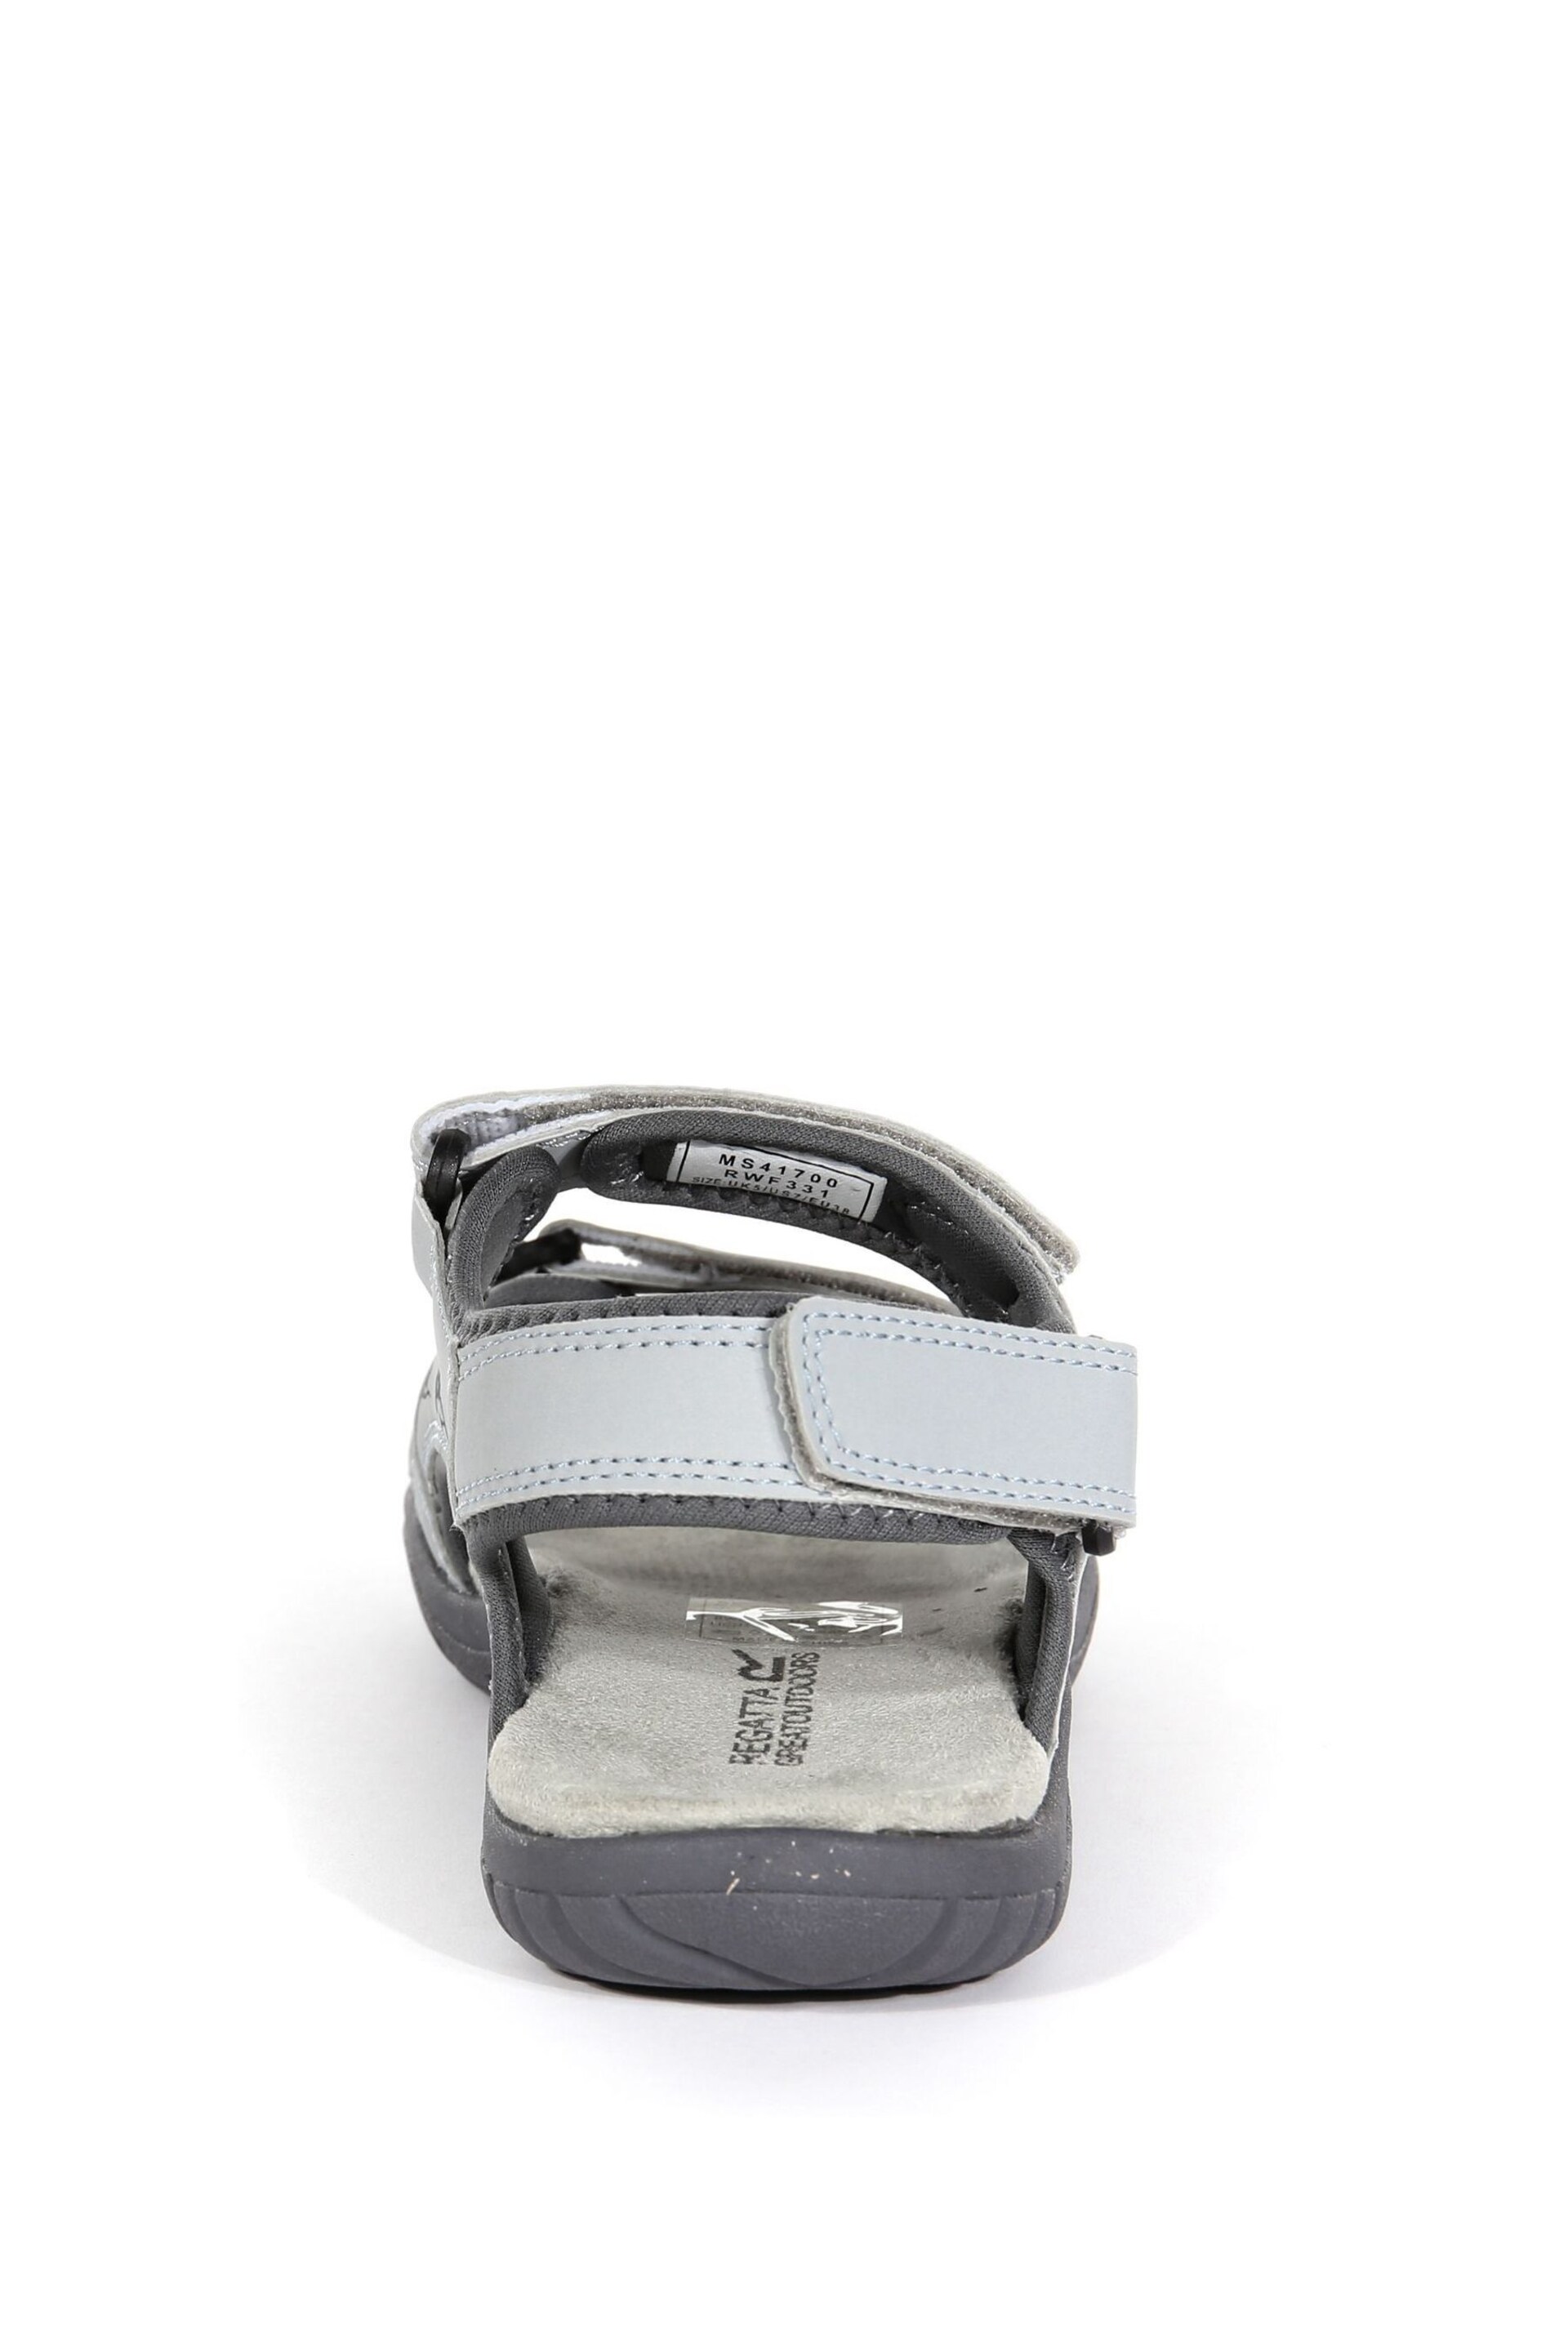 Regatta Light Grey Lady Haris Sandals - Image 4 of 6